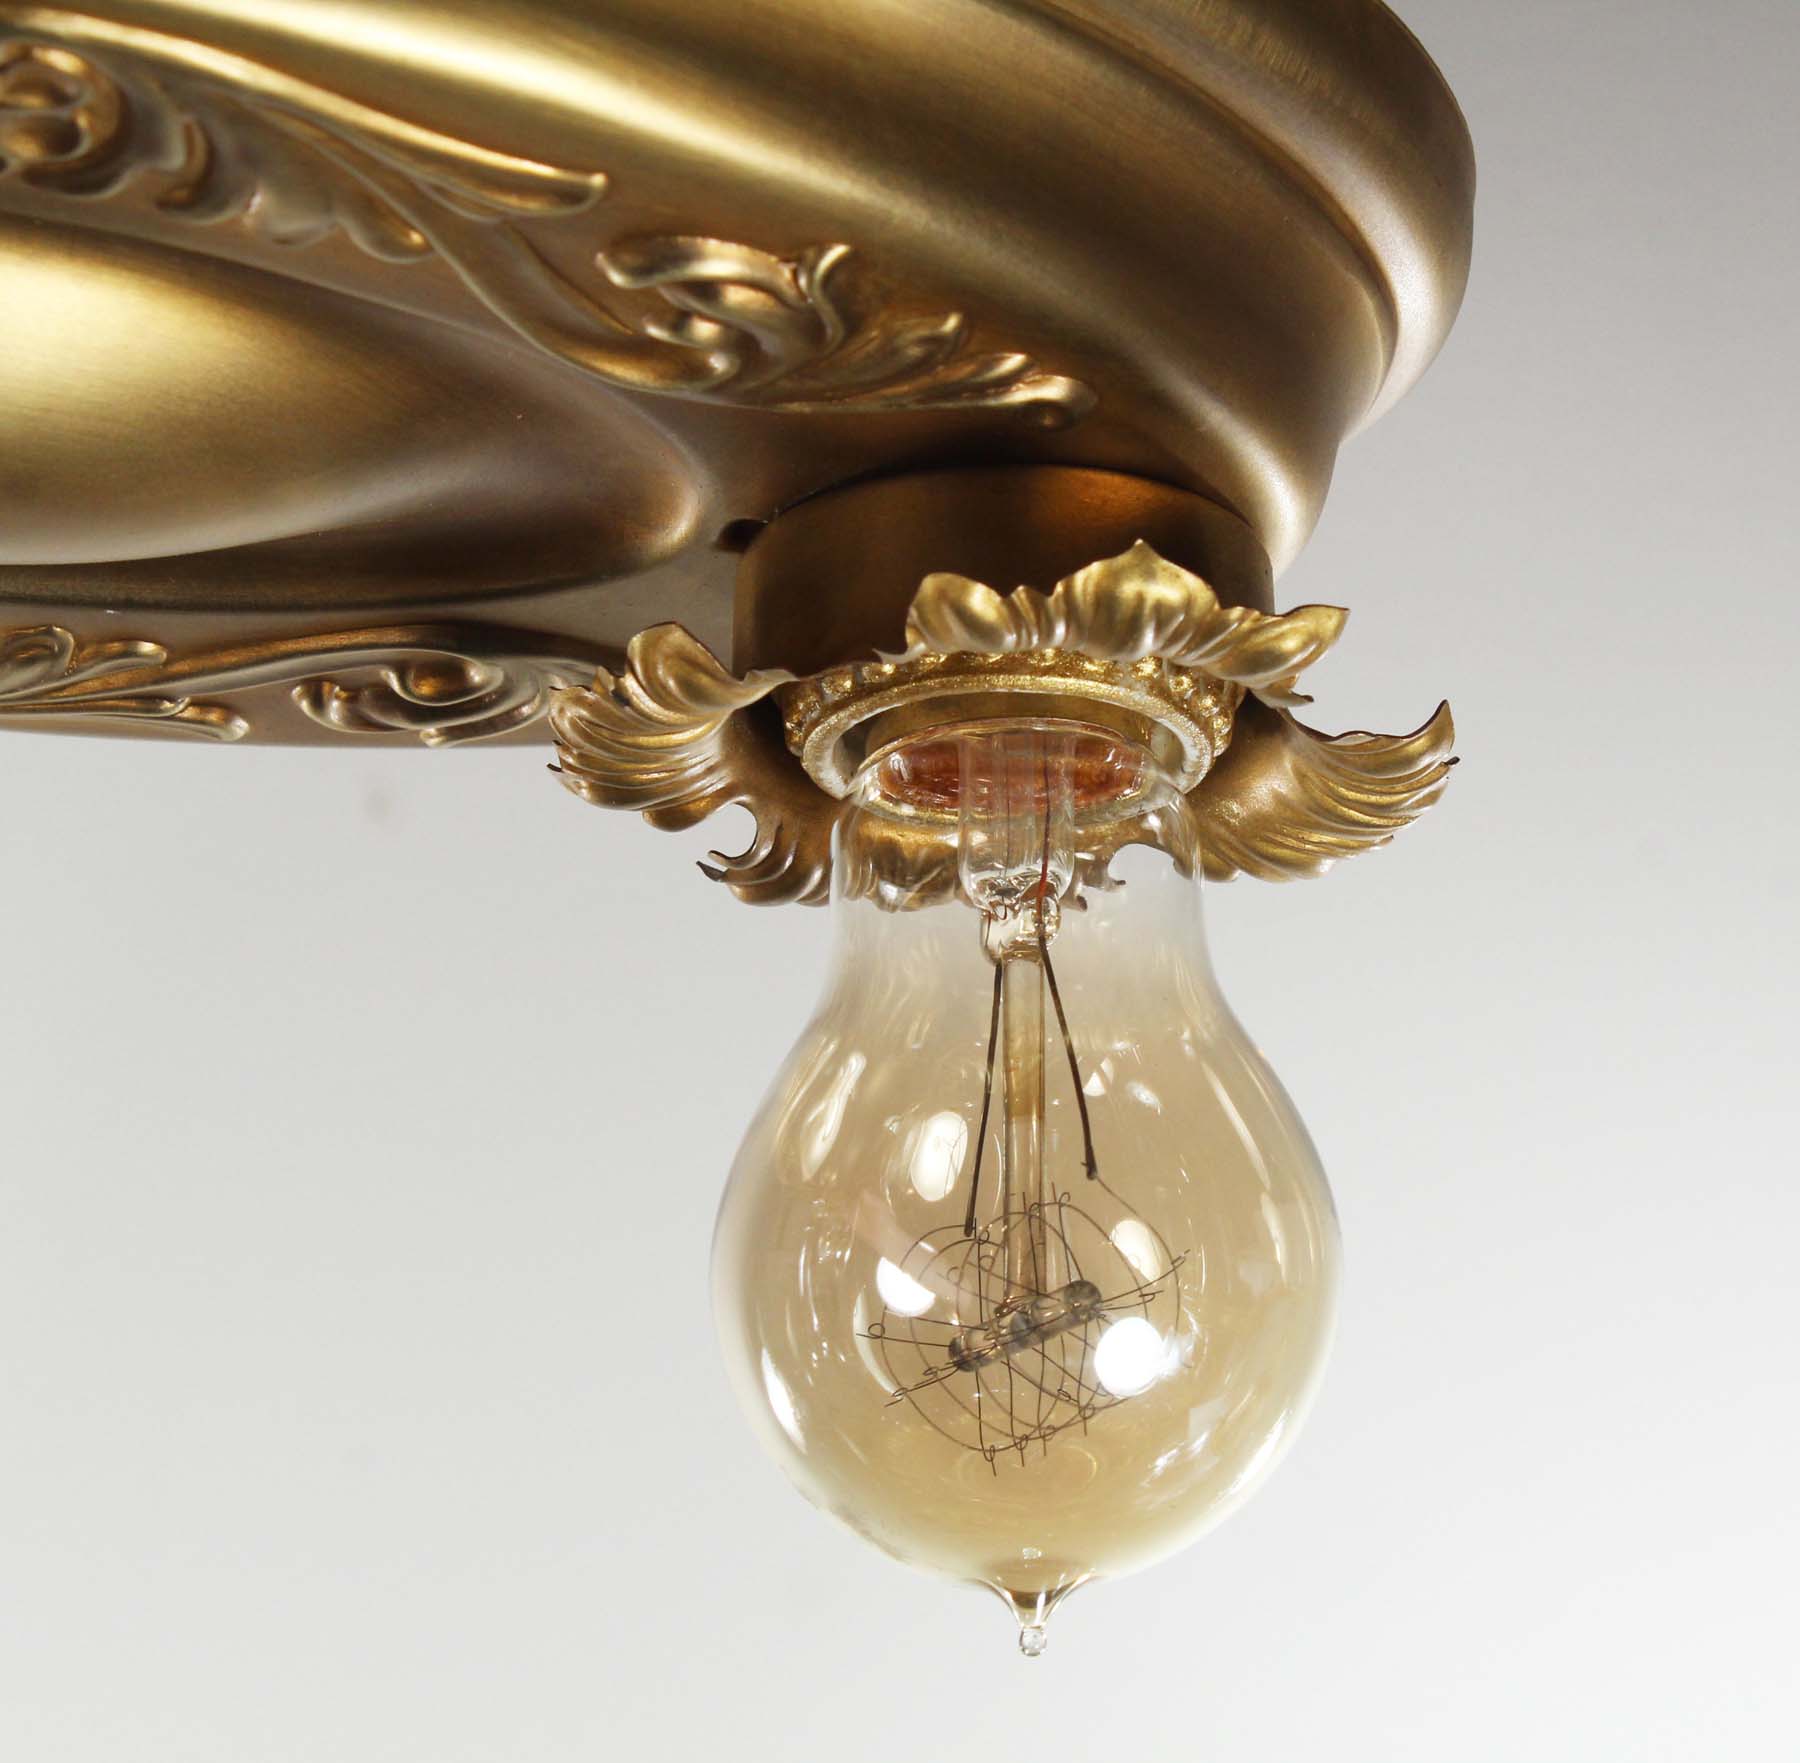 SOLD Neoclassical Flush Mount Fixtures in Brass, Antique Lighting-68404